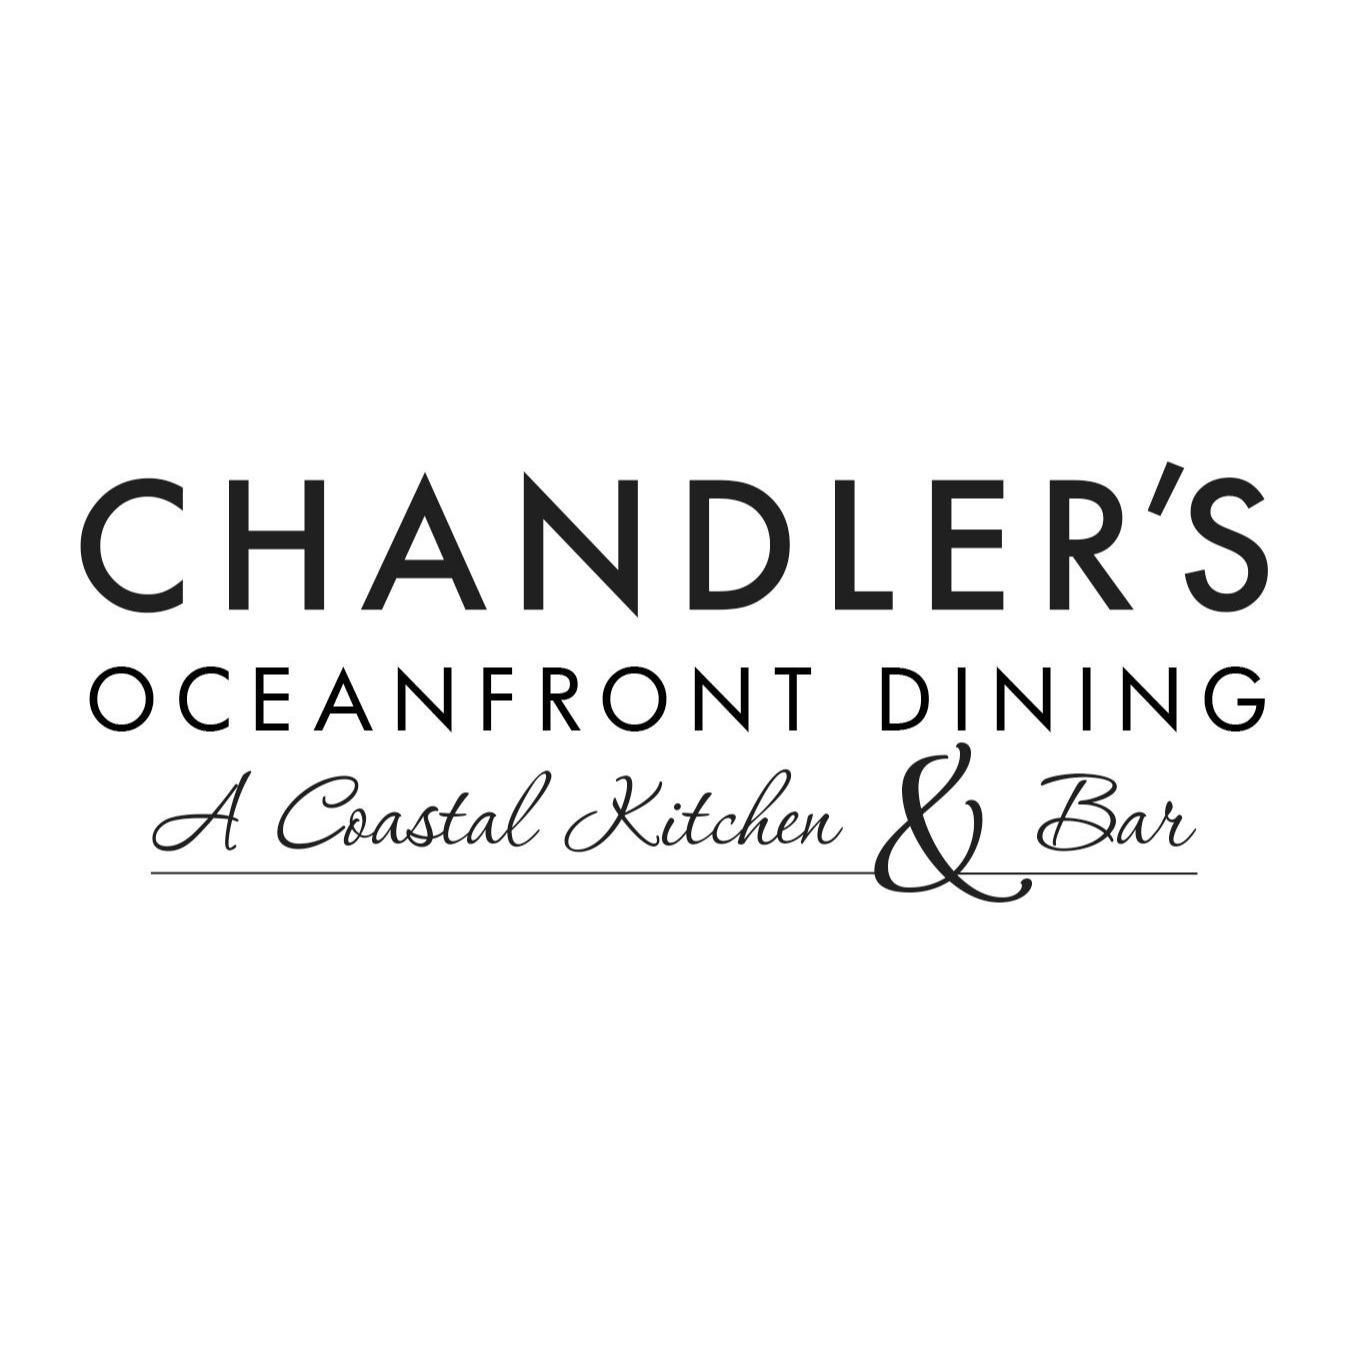 Chandler's Oceanfront Dining